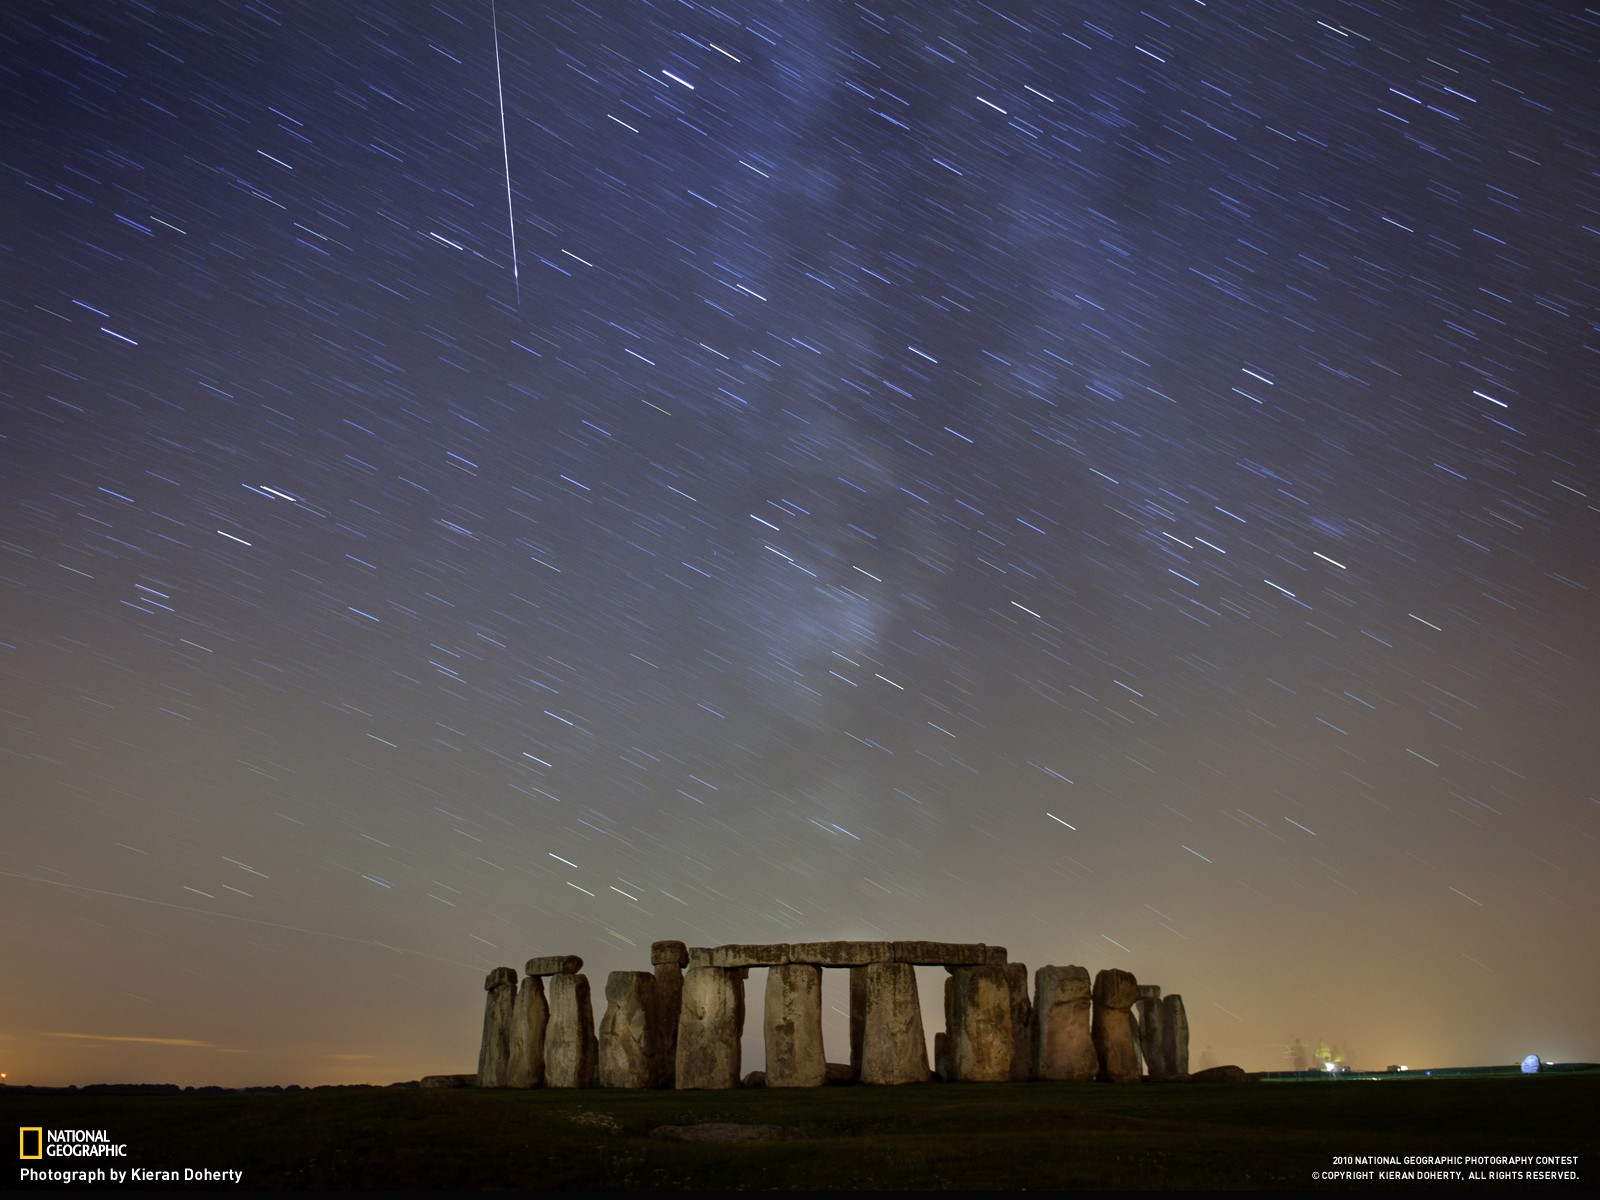 General 1600x1200 Stonehenge  long exposure sky stars National Geographic 2010 (Year) star trails World Heritage Site landmark